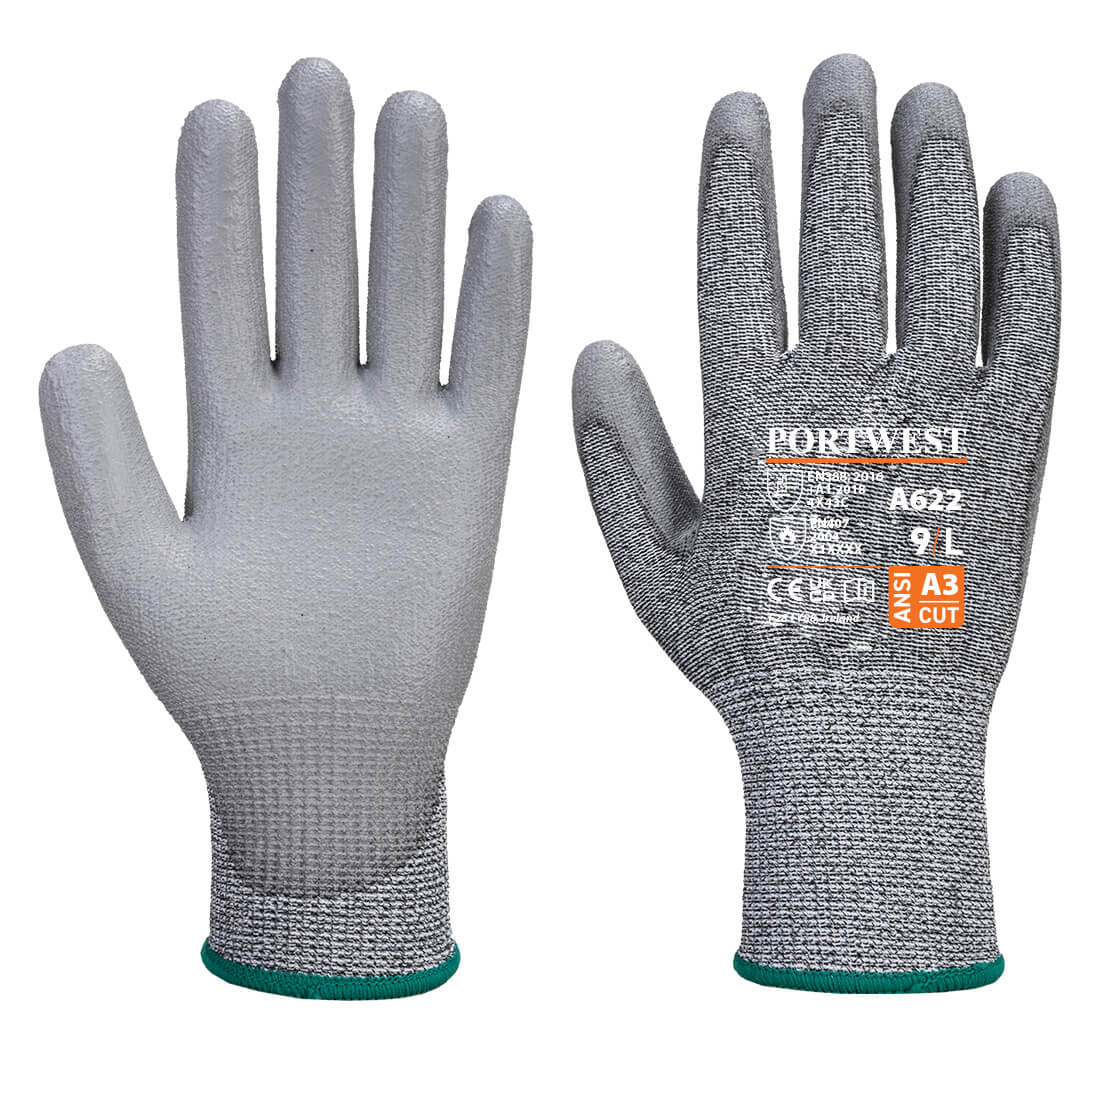 A622 Portwest® PU Coated MR A4 Cut-Resistant Work Gloves